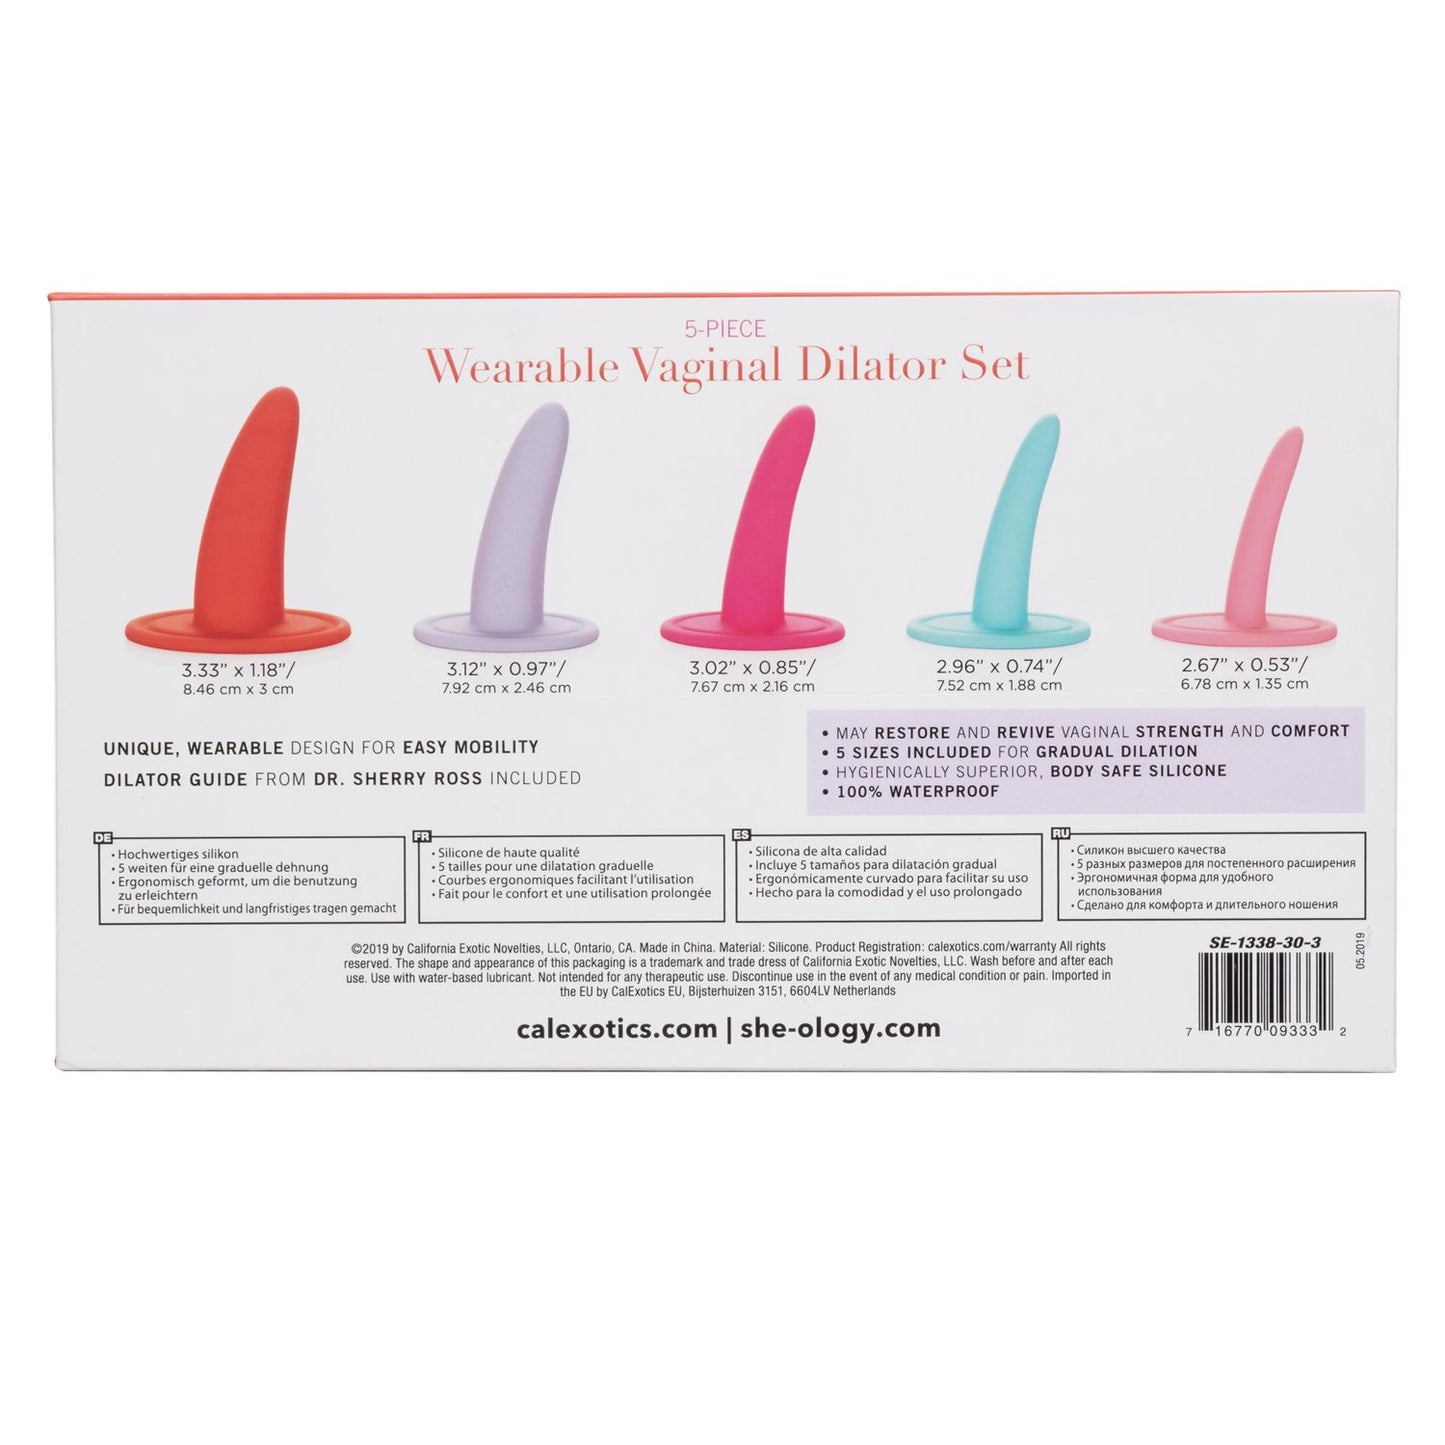 She-ology™ 5-piece Wearable Vaginal Dilator Set